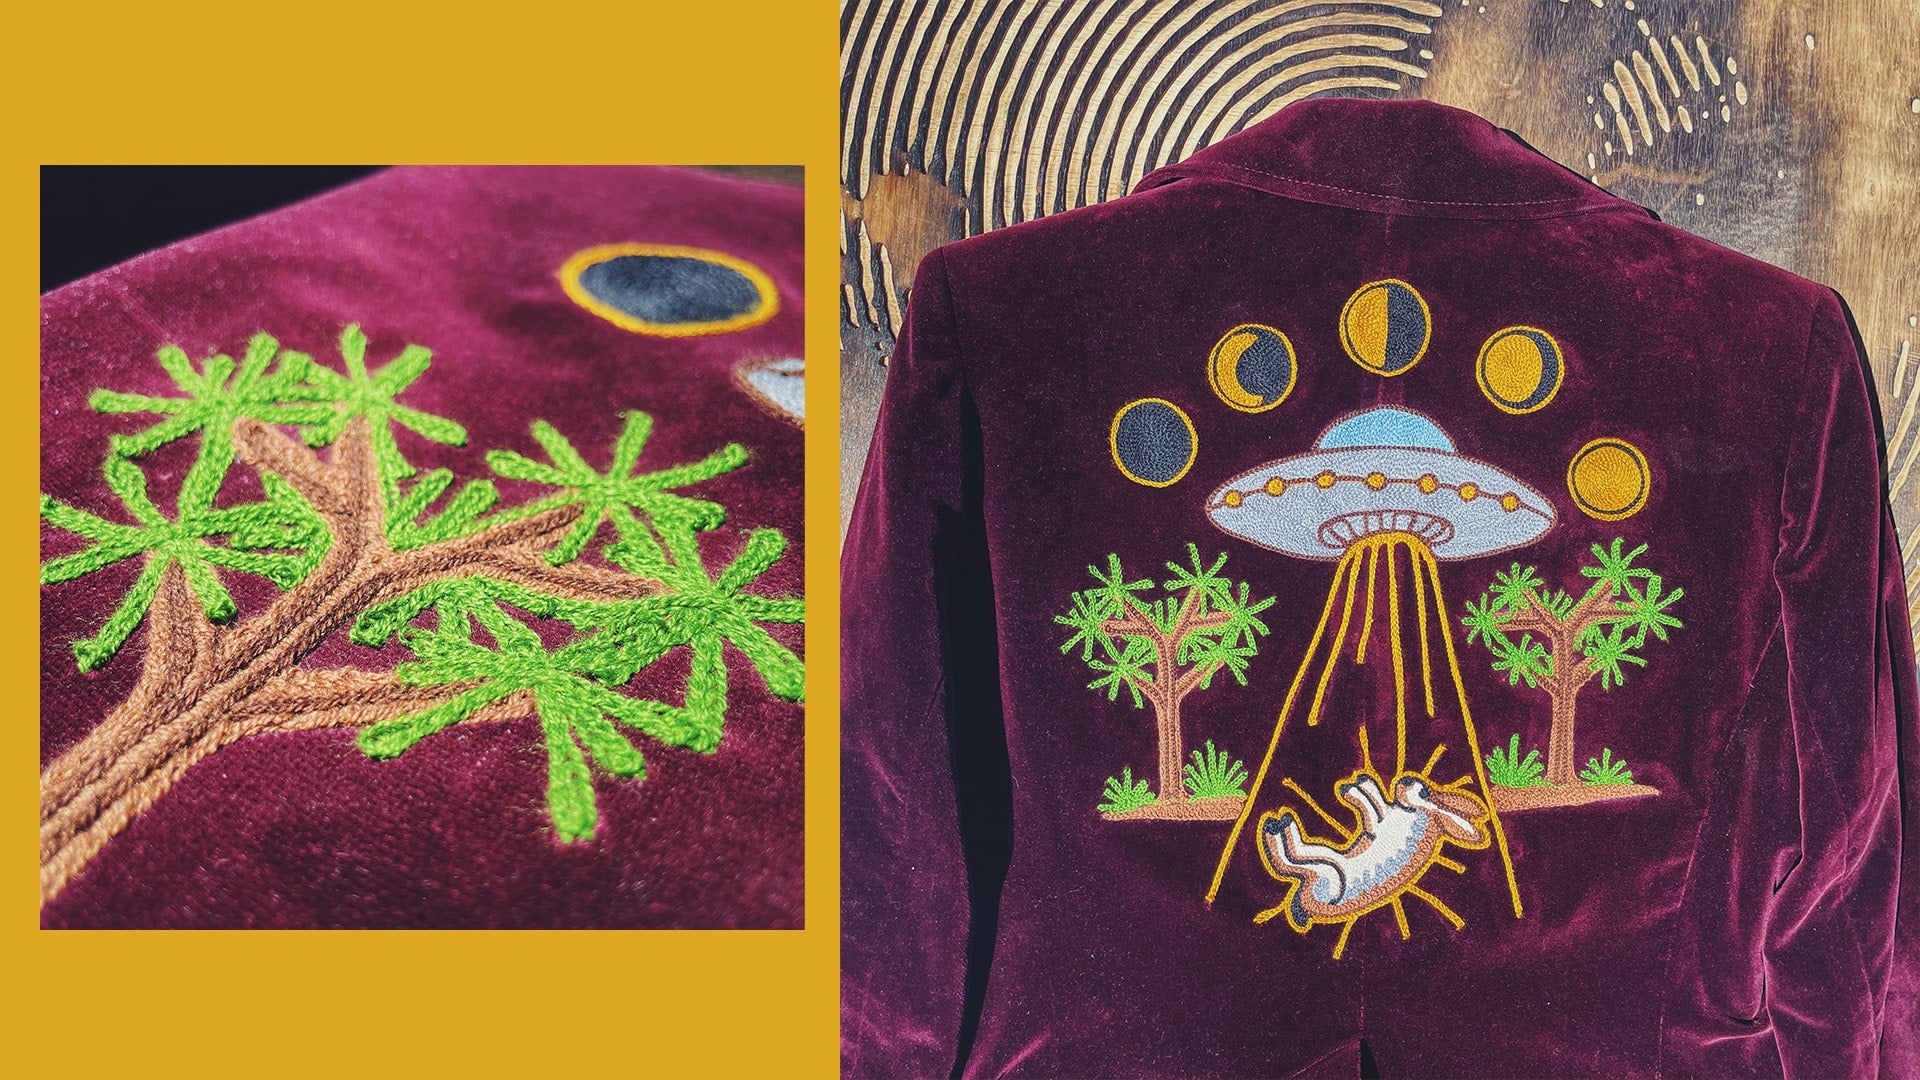 embroidered desert UFO alien scene with joshua trees